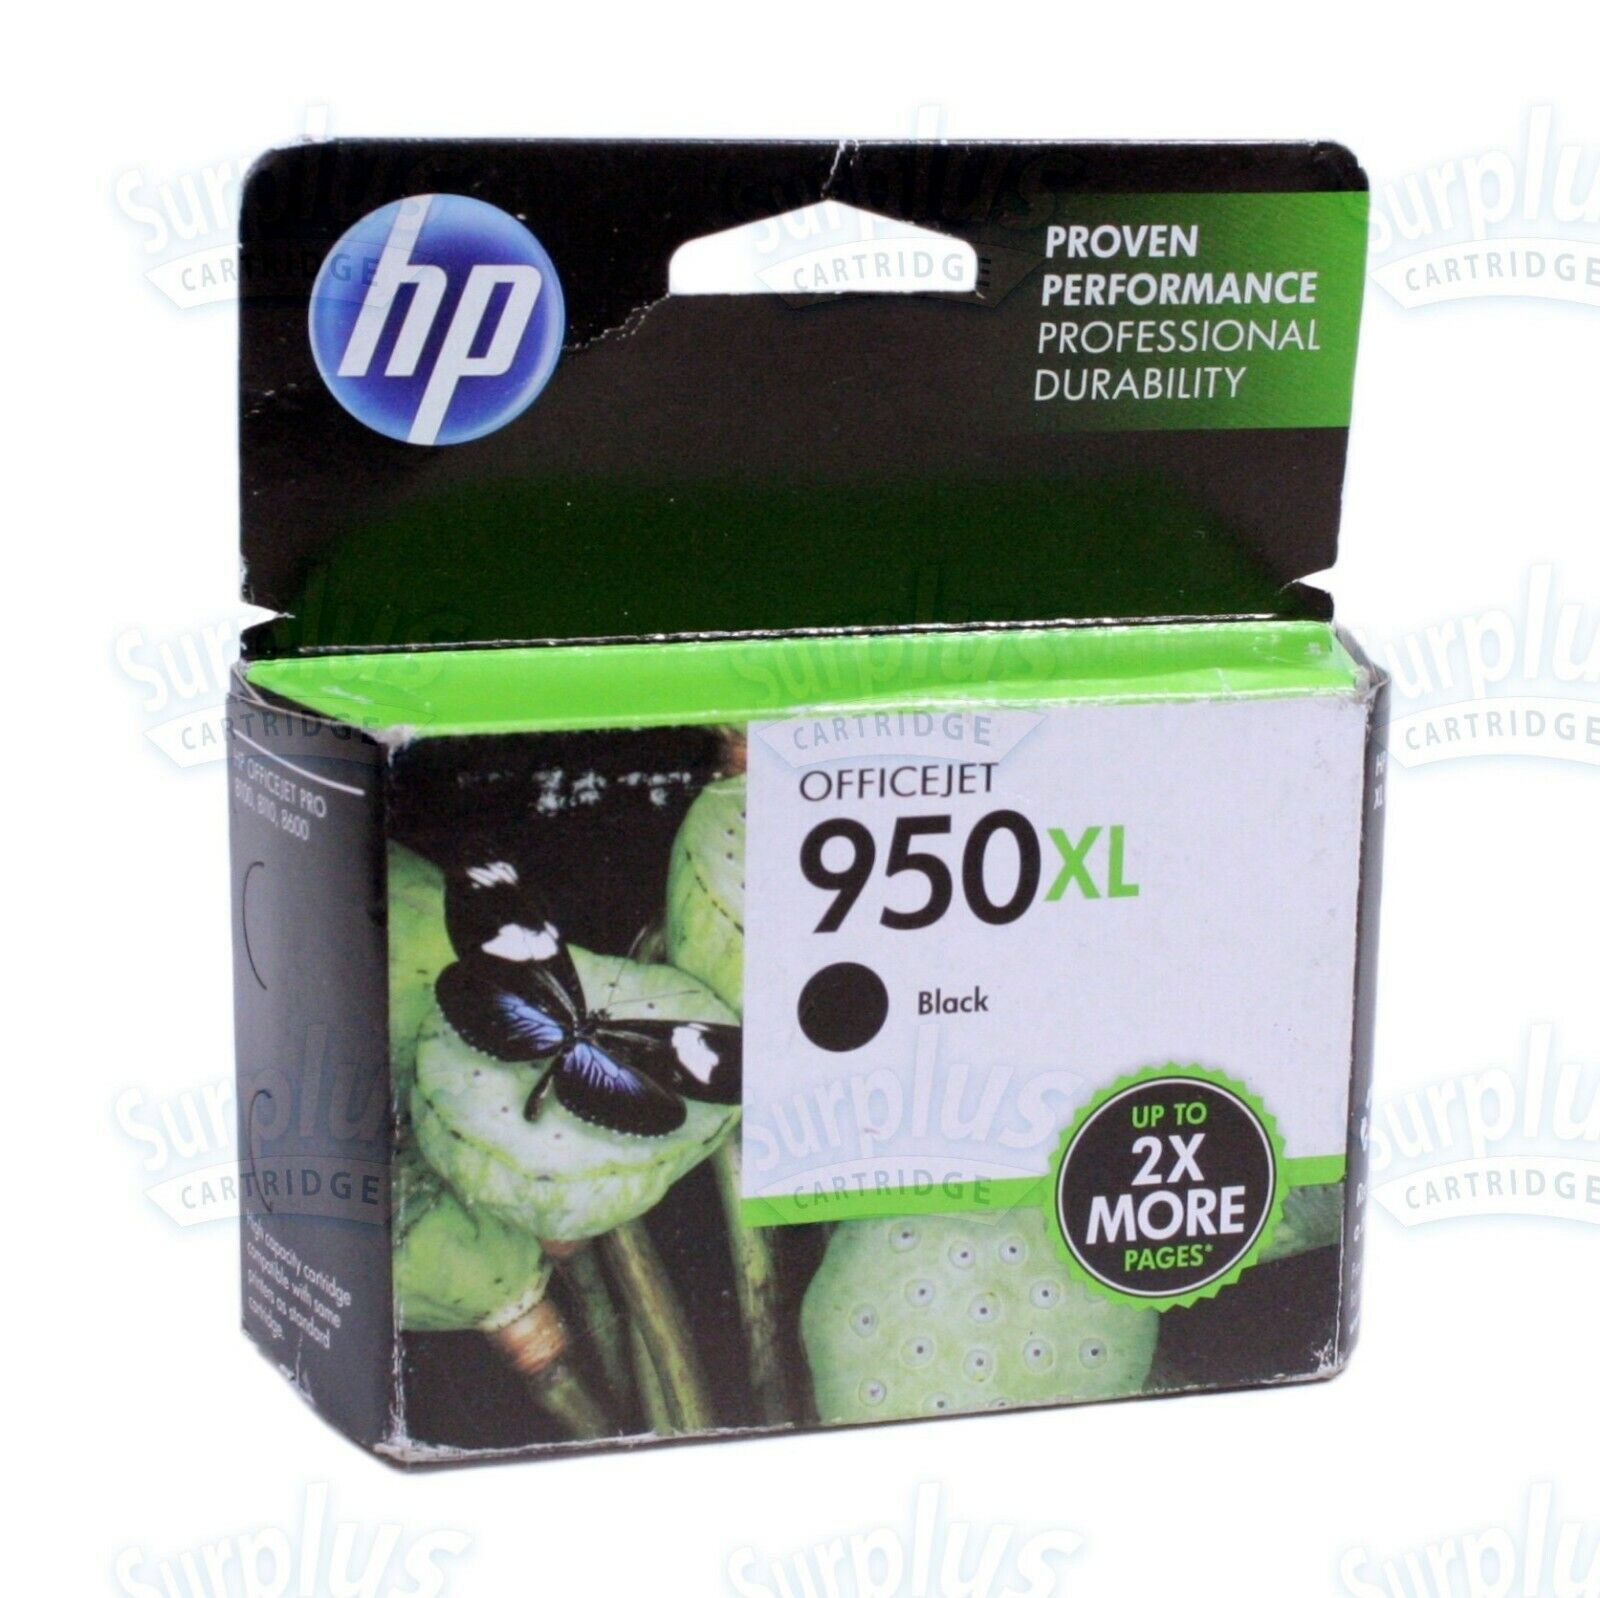 Genuine HP 950XL Black Ink OfficeJet 8110 8620 8600 8625 8700 251dw